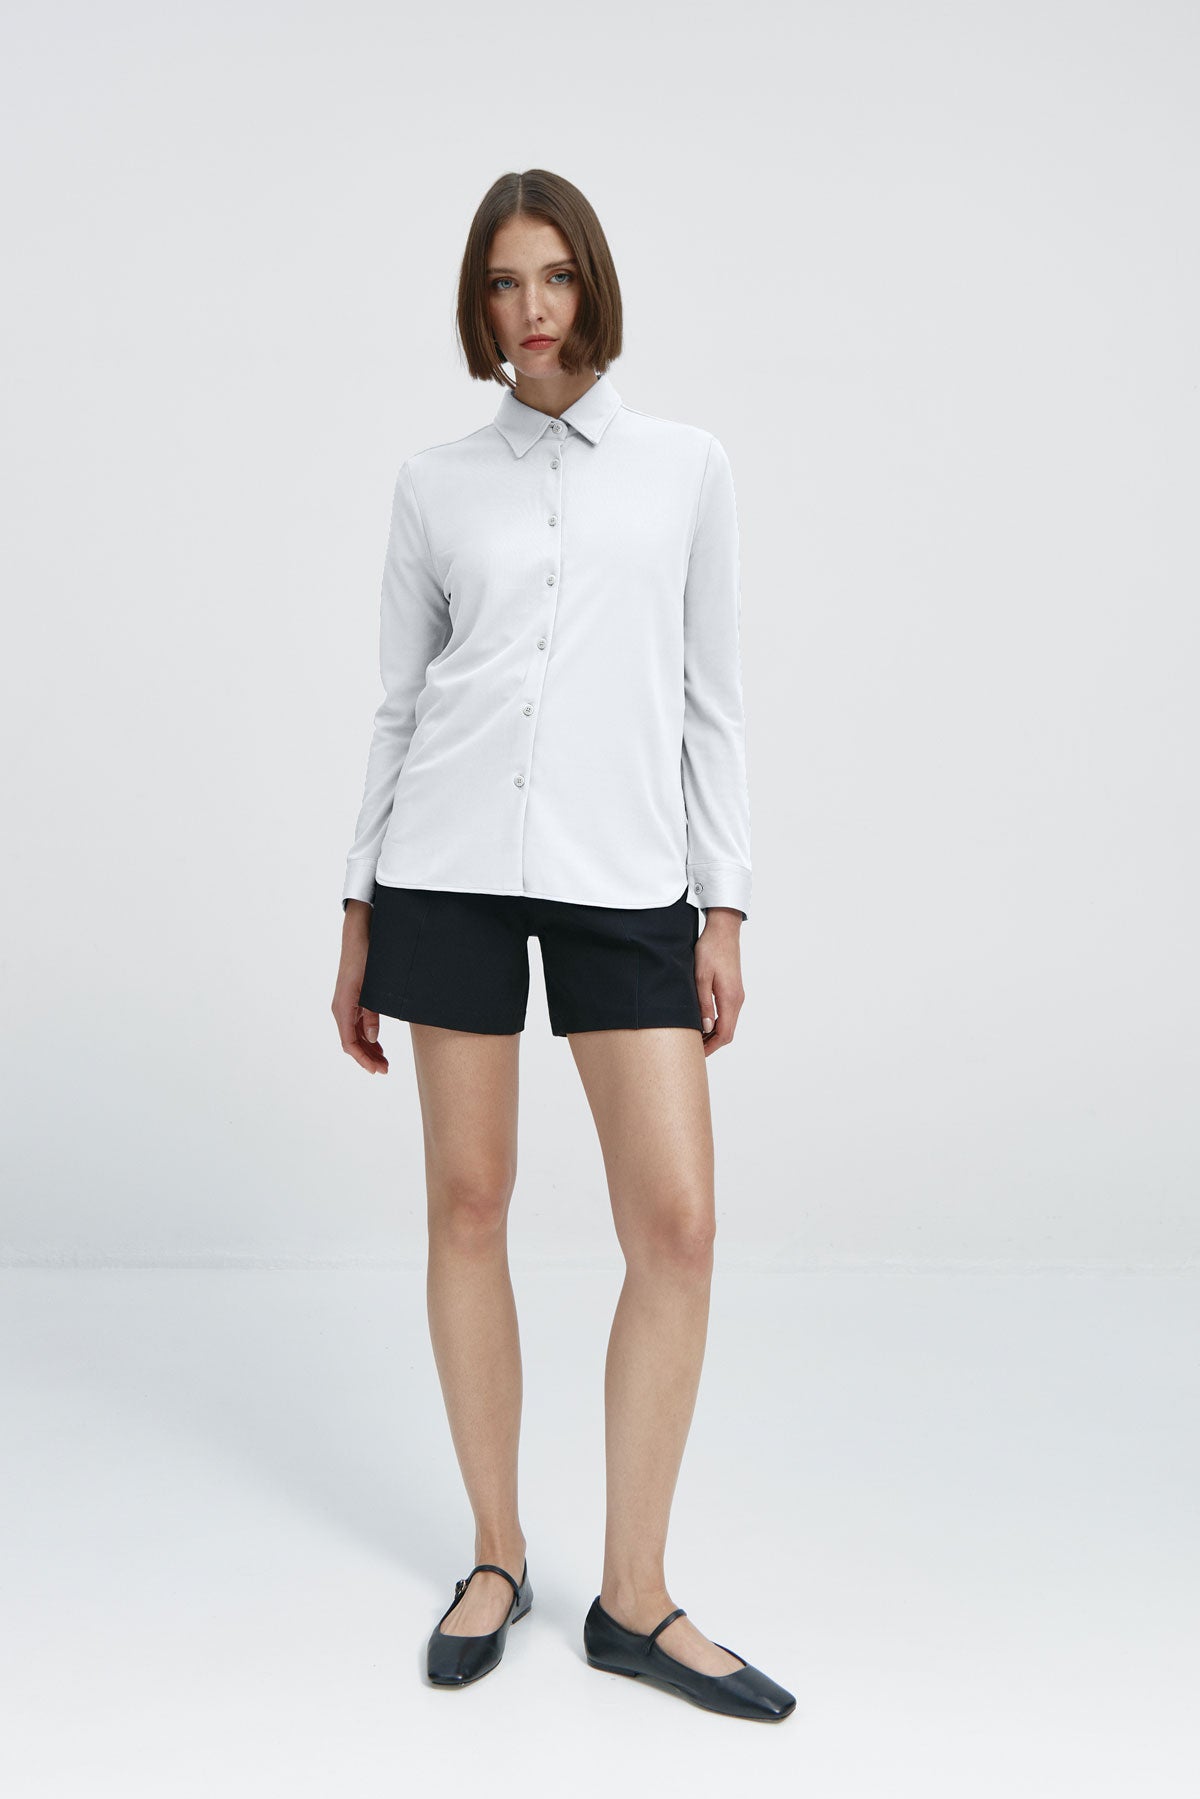 Camisa manga larga oversized mujer blanca: Camisa holgada de mujer blanca de manga larga para un estilo extra. Foto cuerpo entero